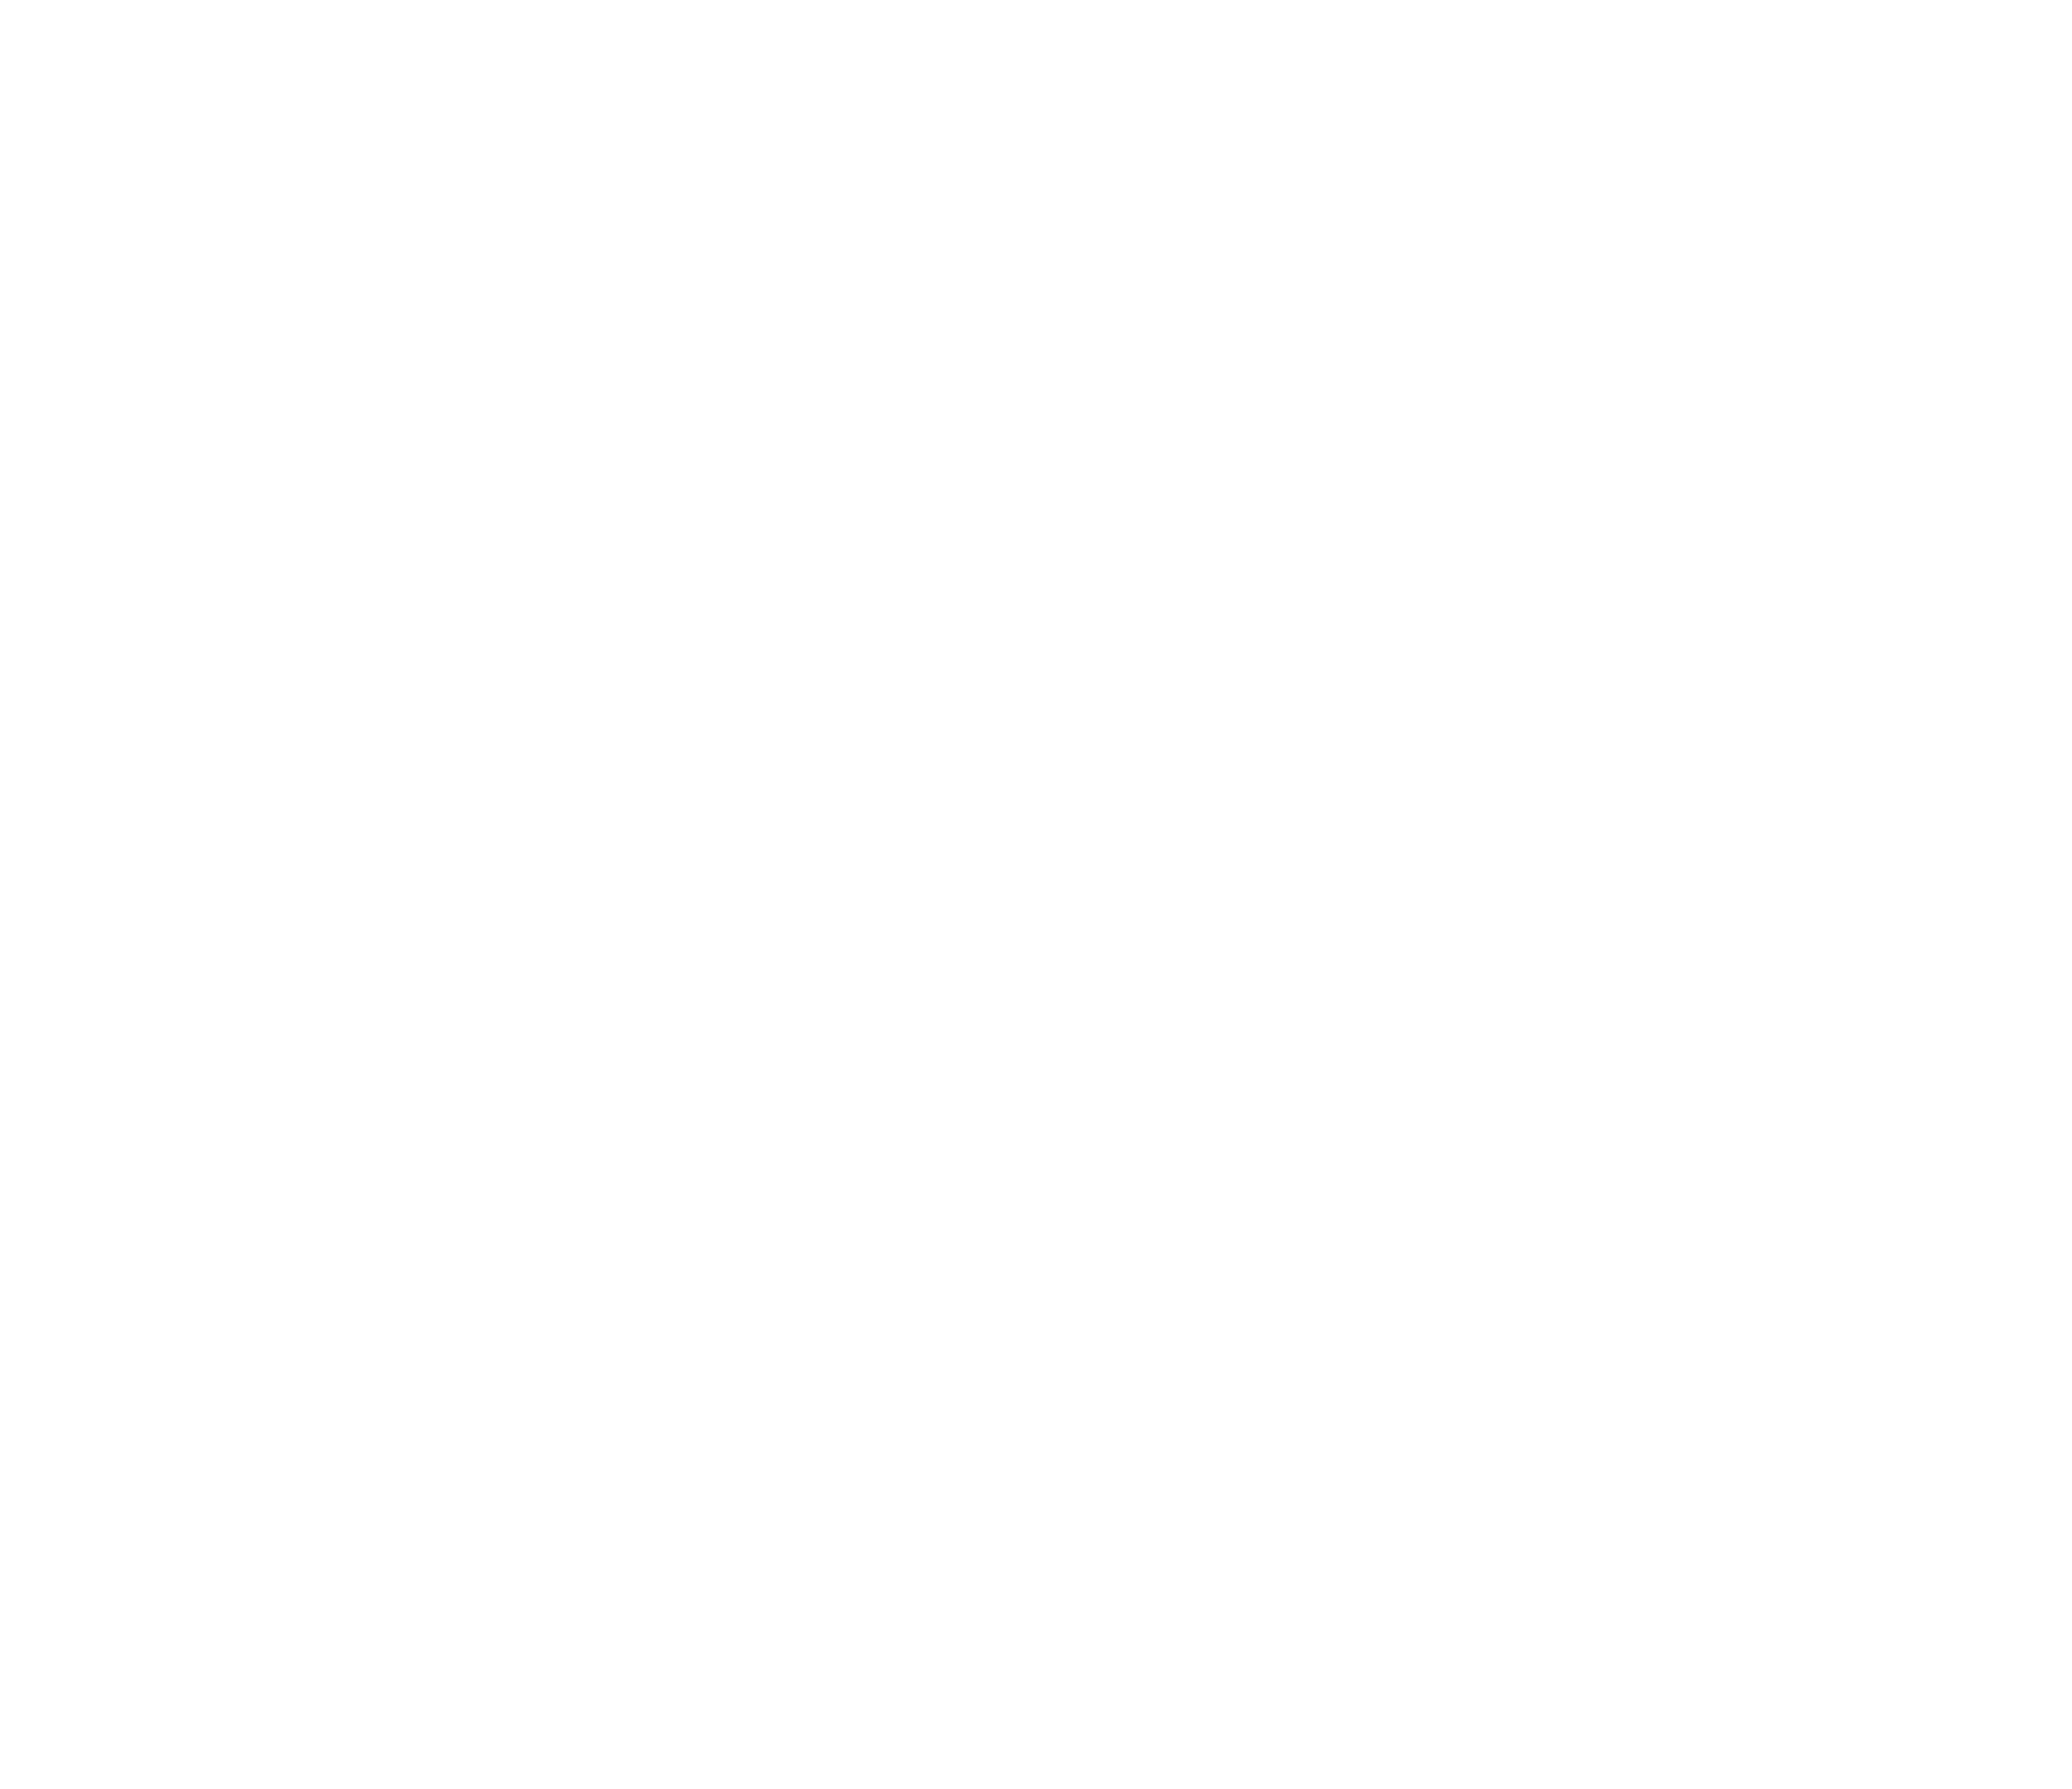 supply-demand-chain-executive-pros-to-know-2023-award-logo